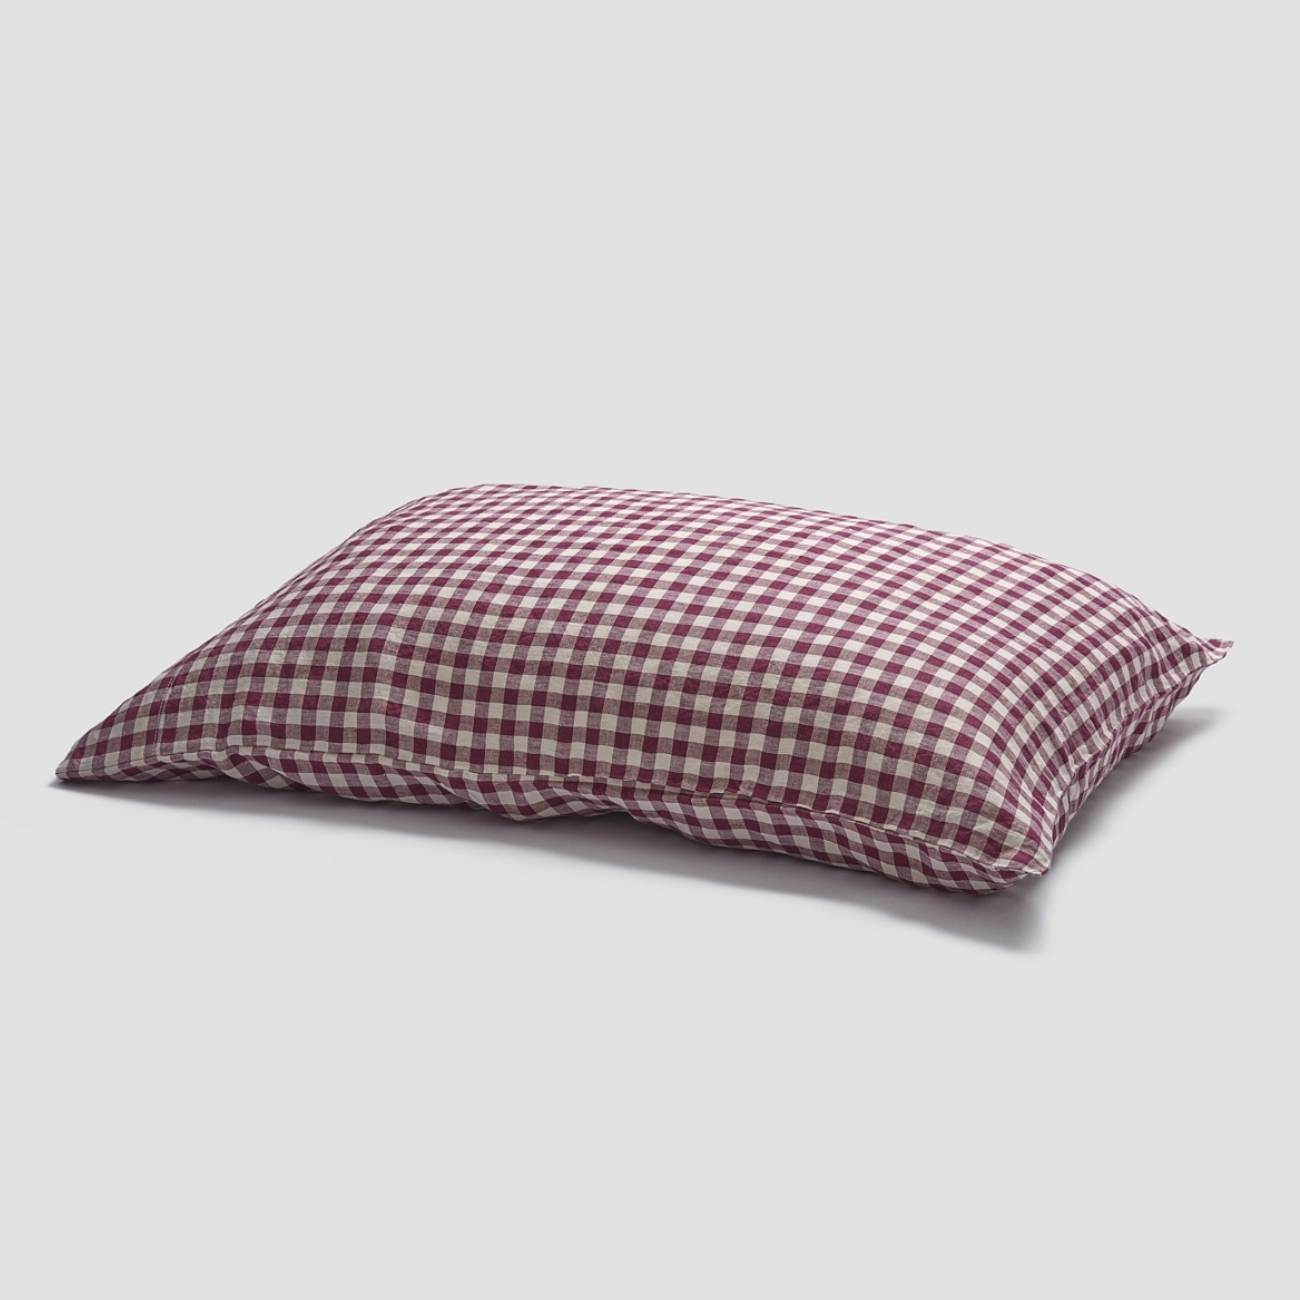 Berry Gingham Linen Pillowcases (Pair)